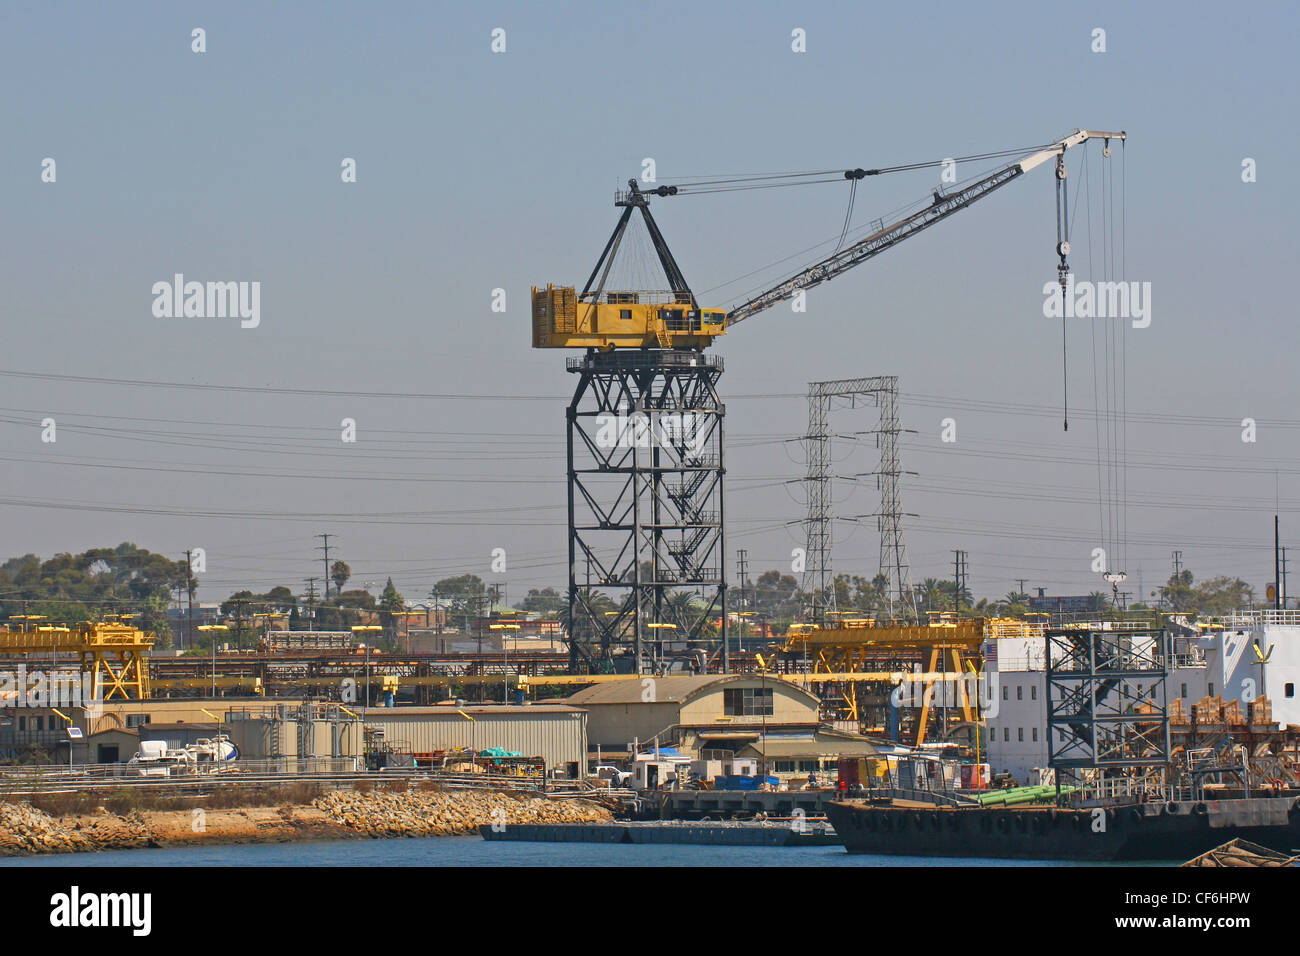 Images of San Diego, California.  Shipyard Stock Photo